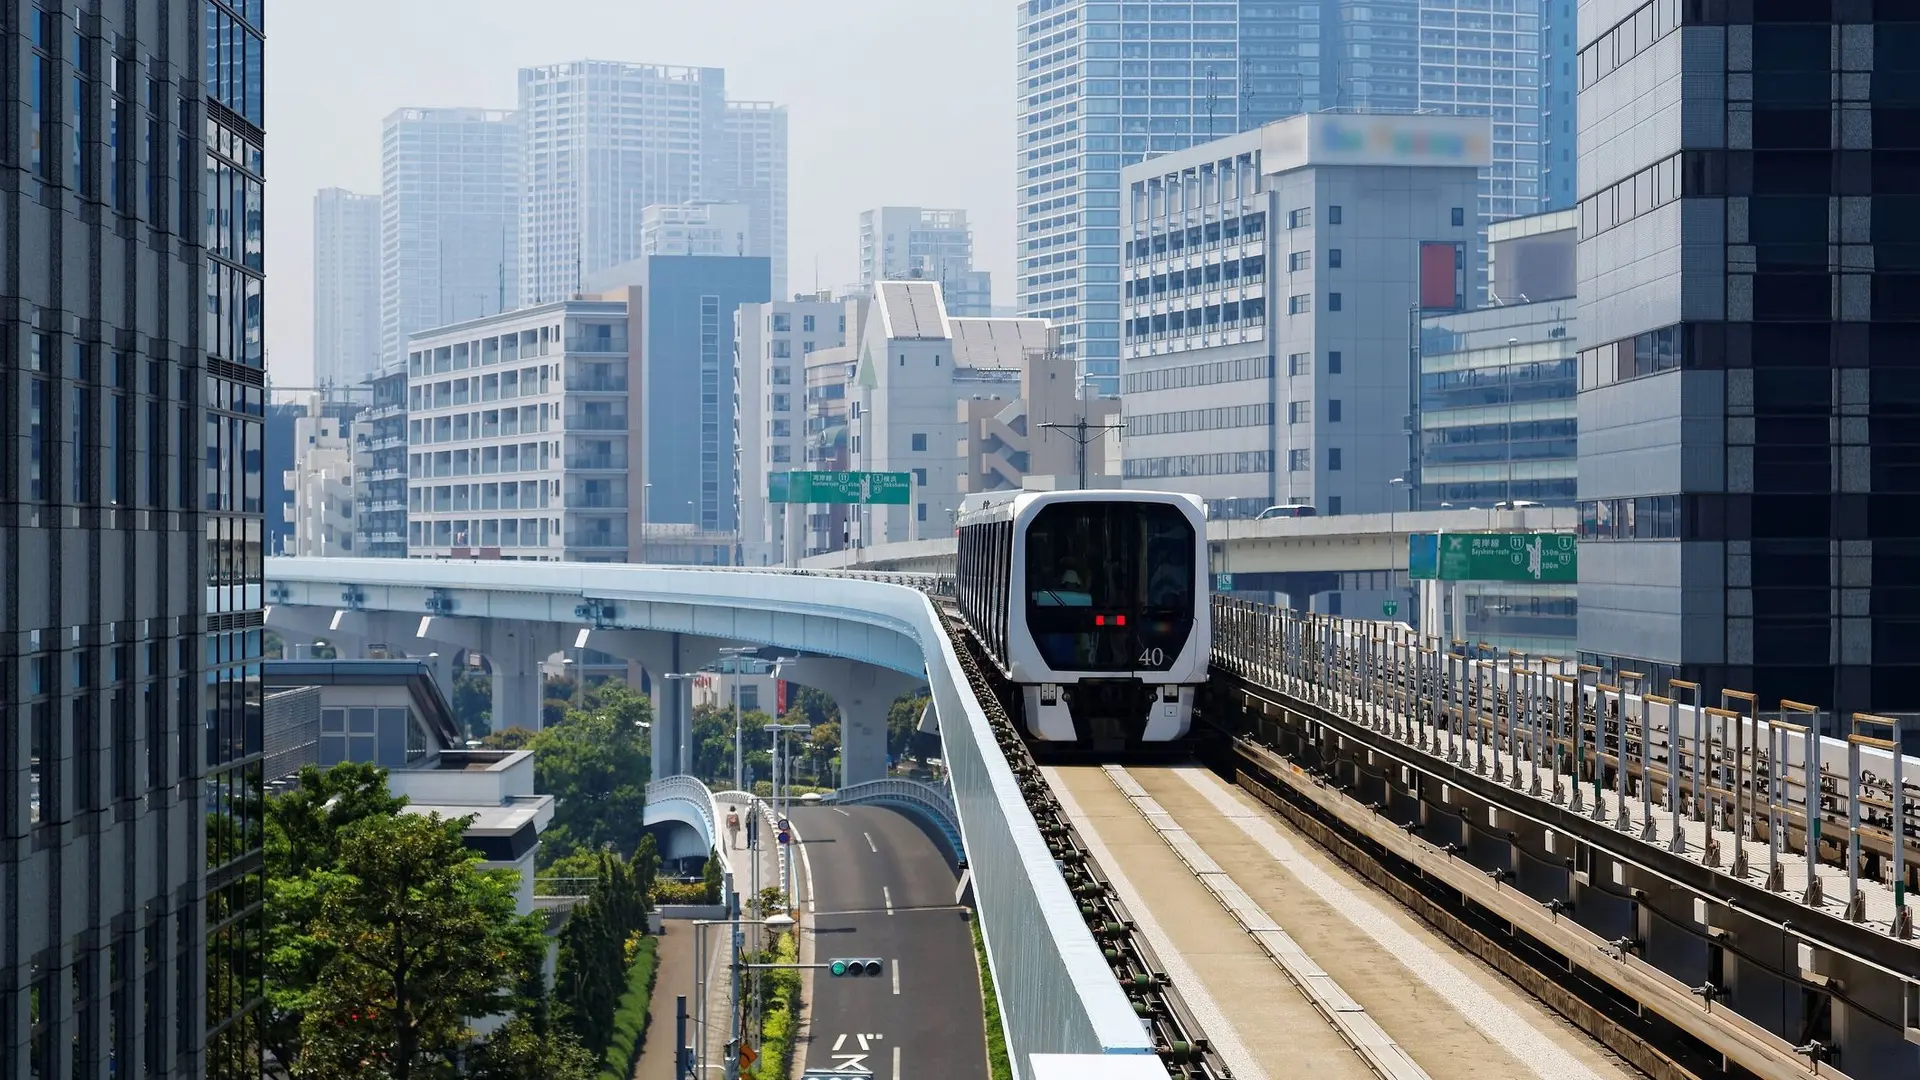 Tokyo Monorail, white train passing through the city.